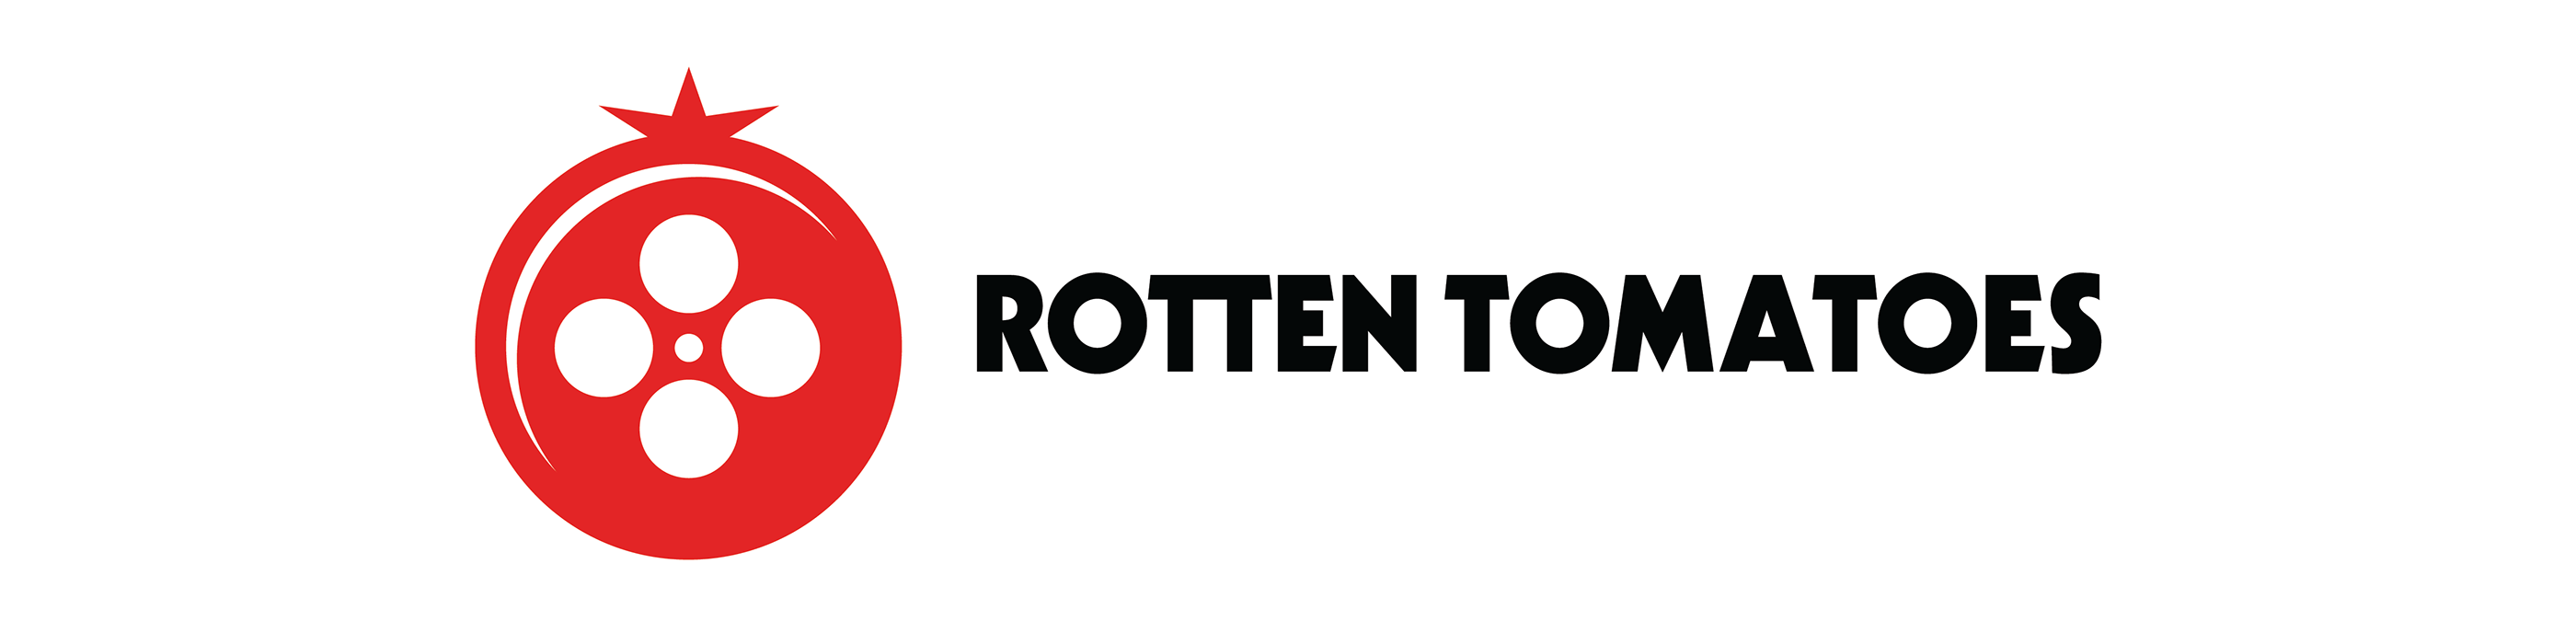 Adobe Portfolio Rotten Tomatoes branding logo design Movies Cinema reviews.